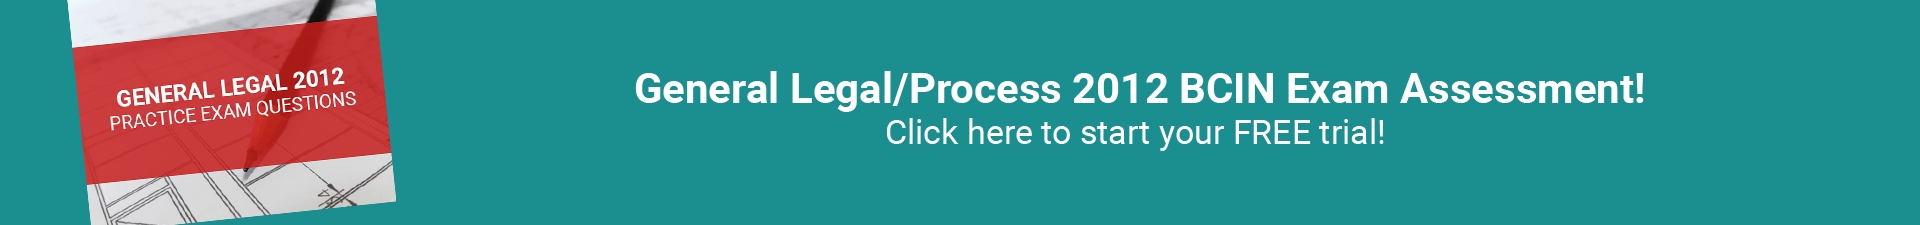 General Legal/Process 2012 Free Assessment